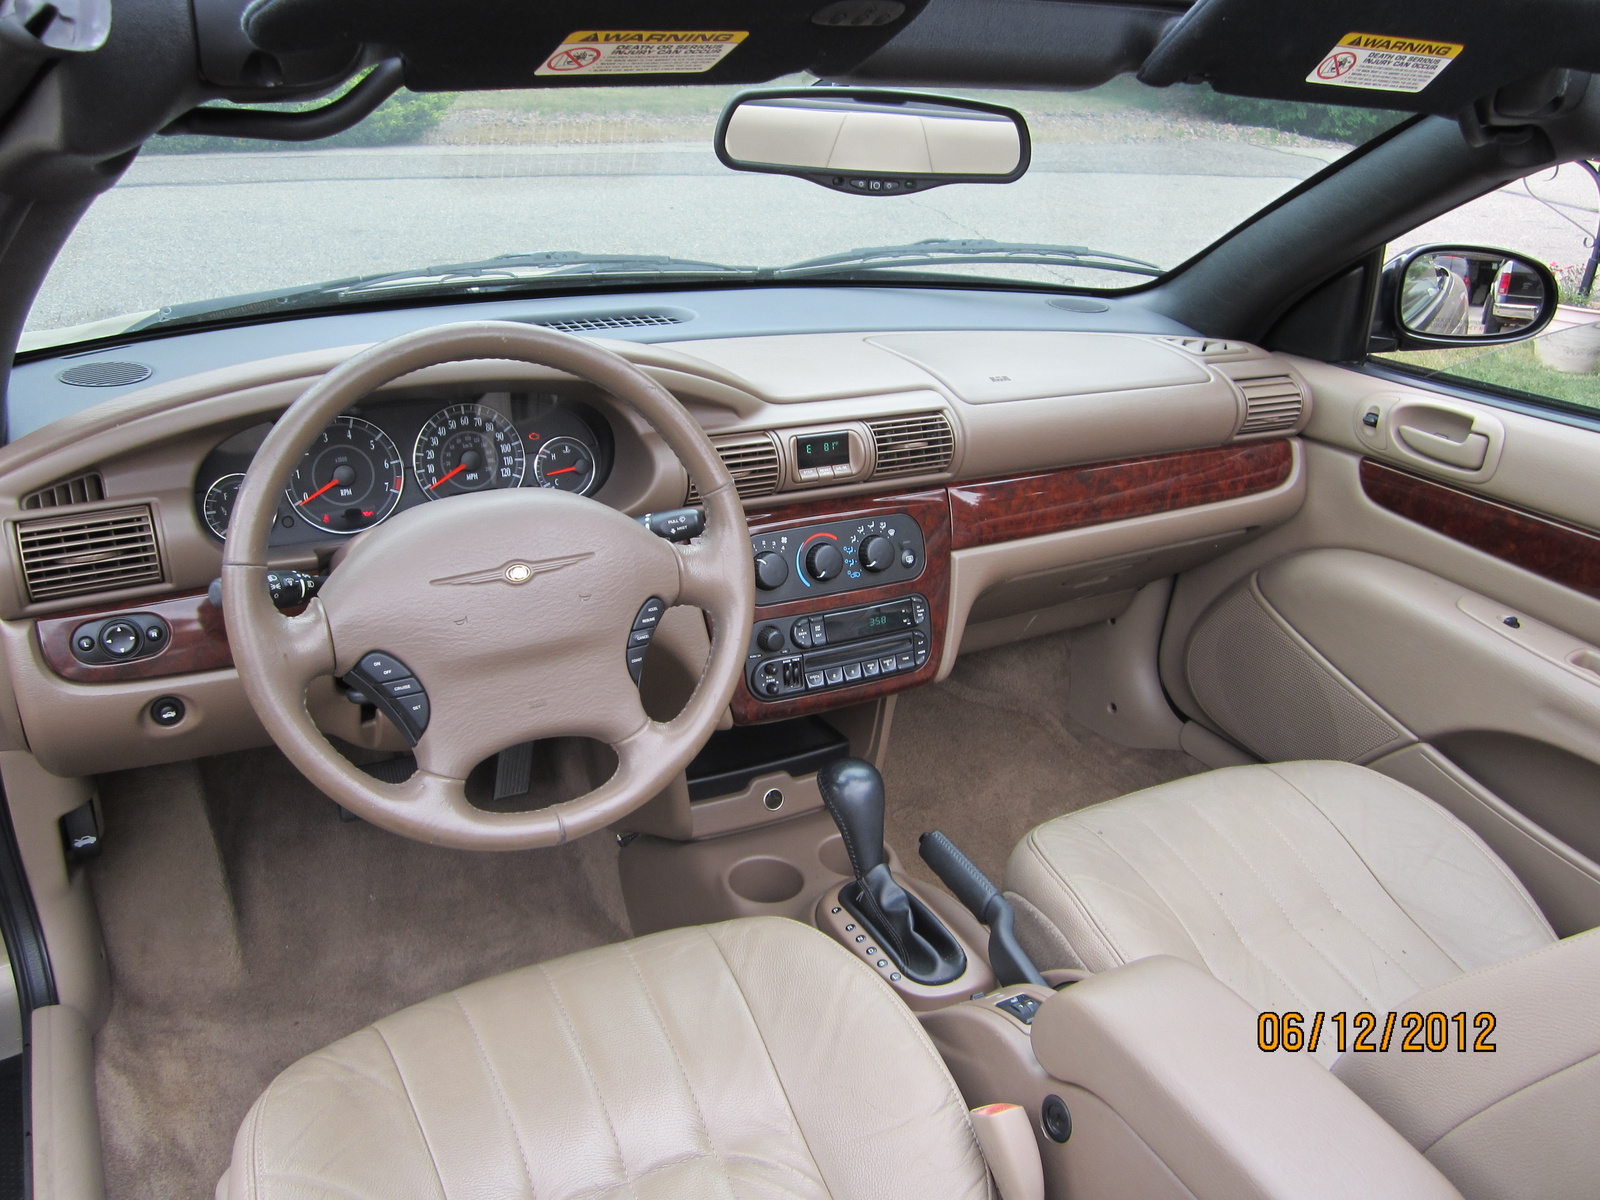 2002 sebring convertible interior doors handle